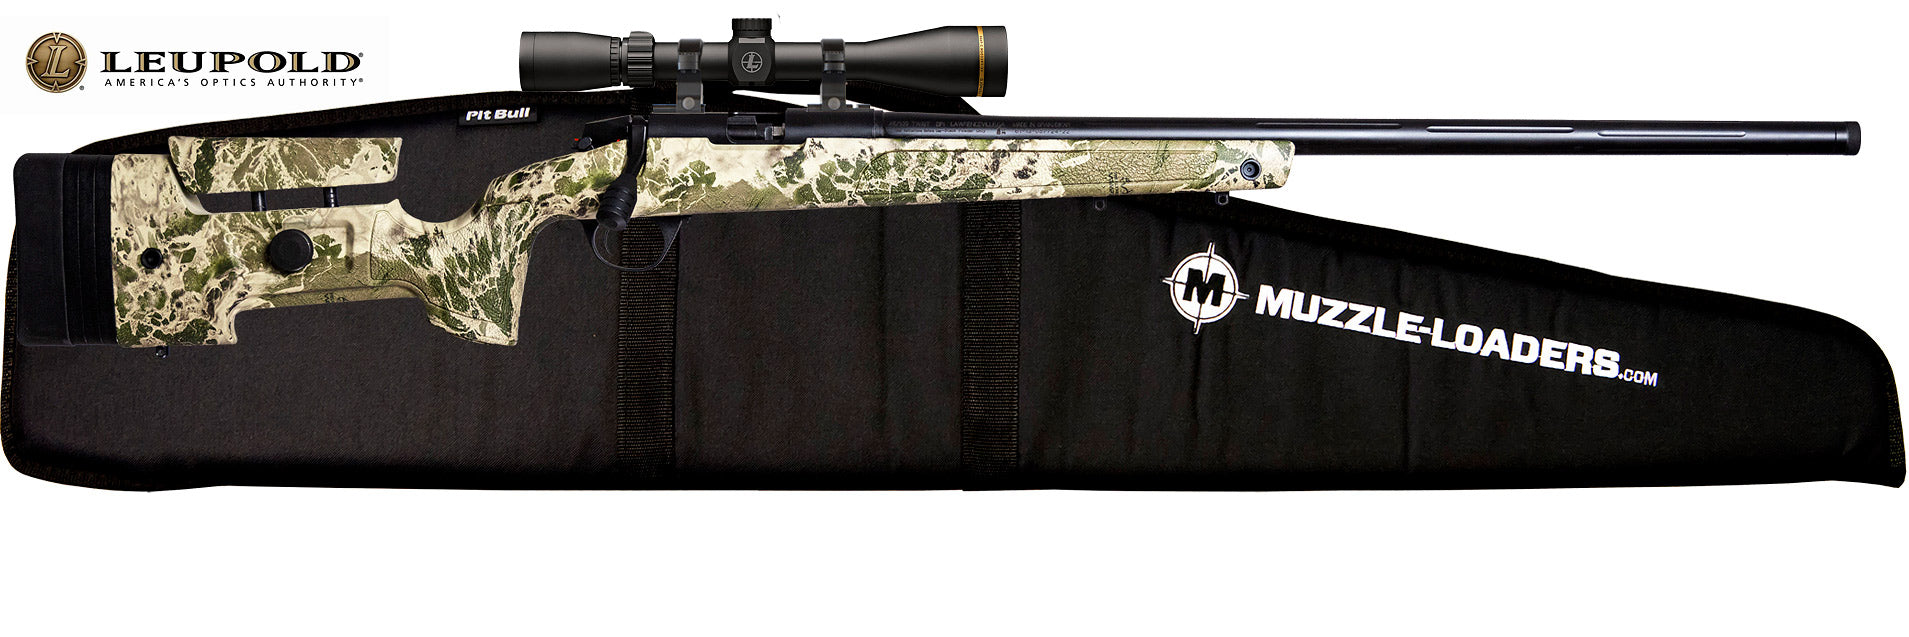 CVA™ Paramount Muzzleloader Rifle w/ Leupold™ Scope Combo - .45 Caliber Nitride Threaded Barrel - PR3507SNLC